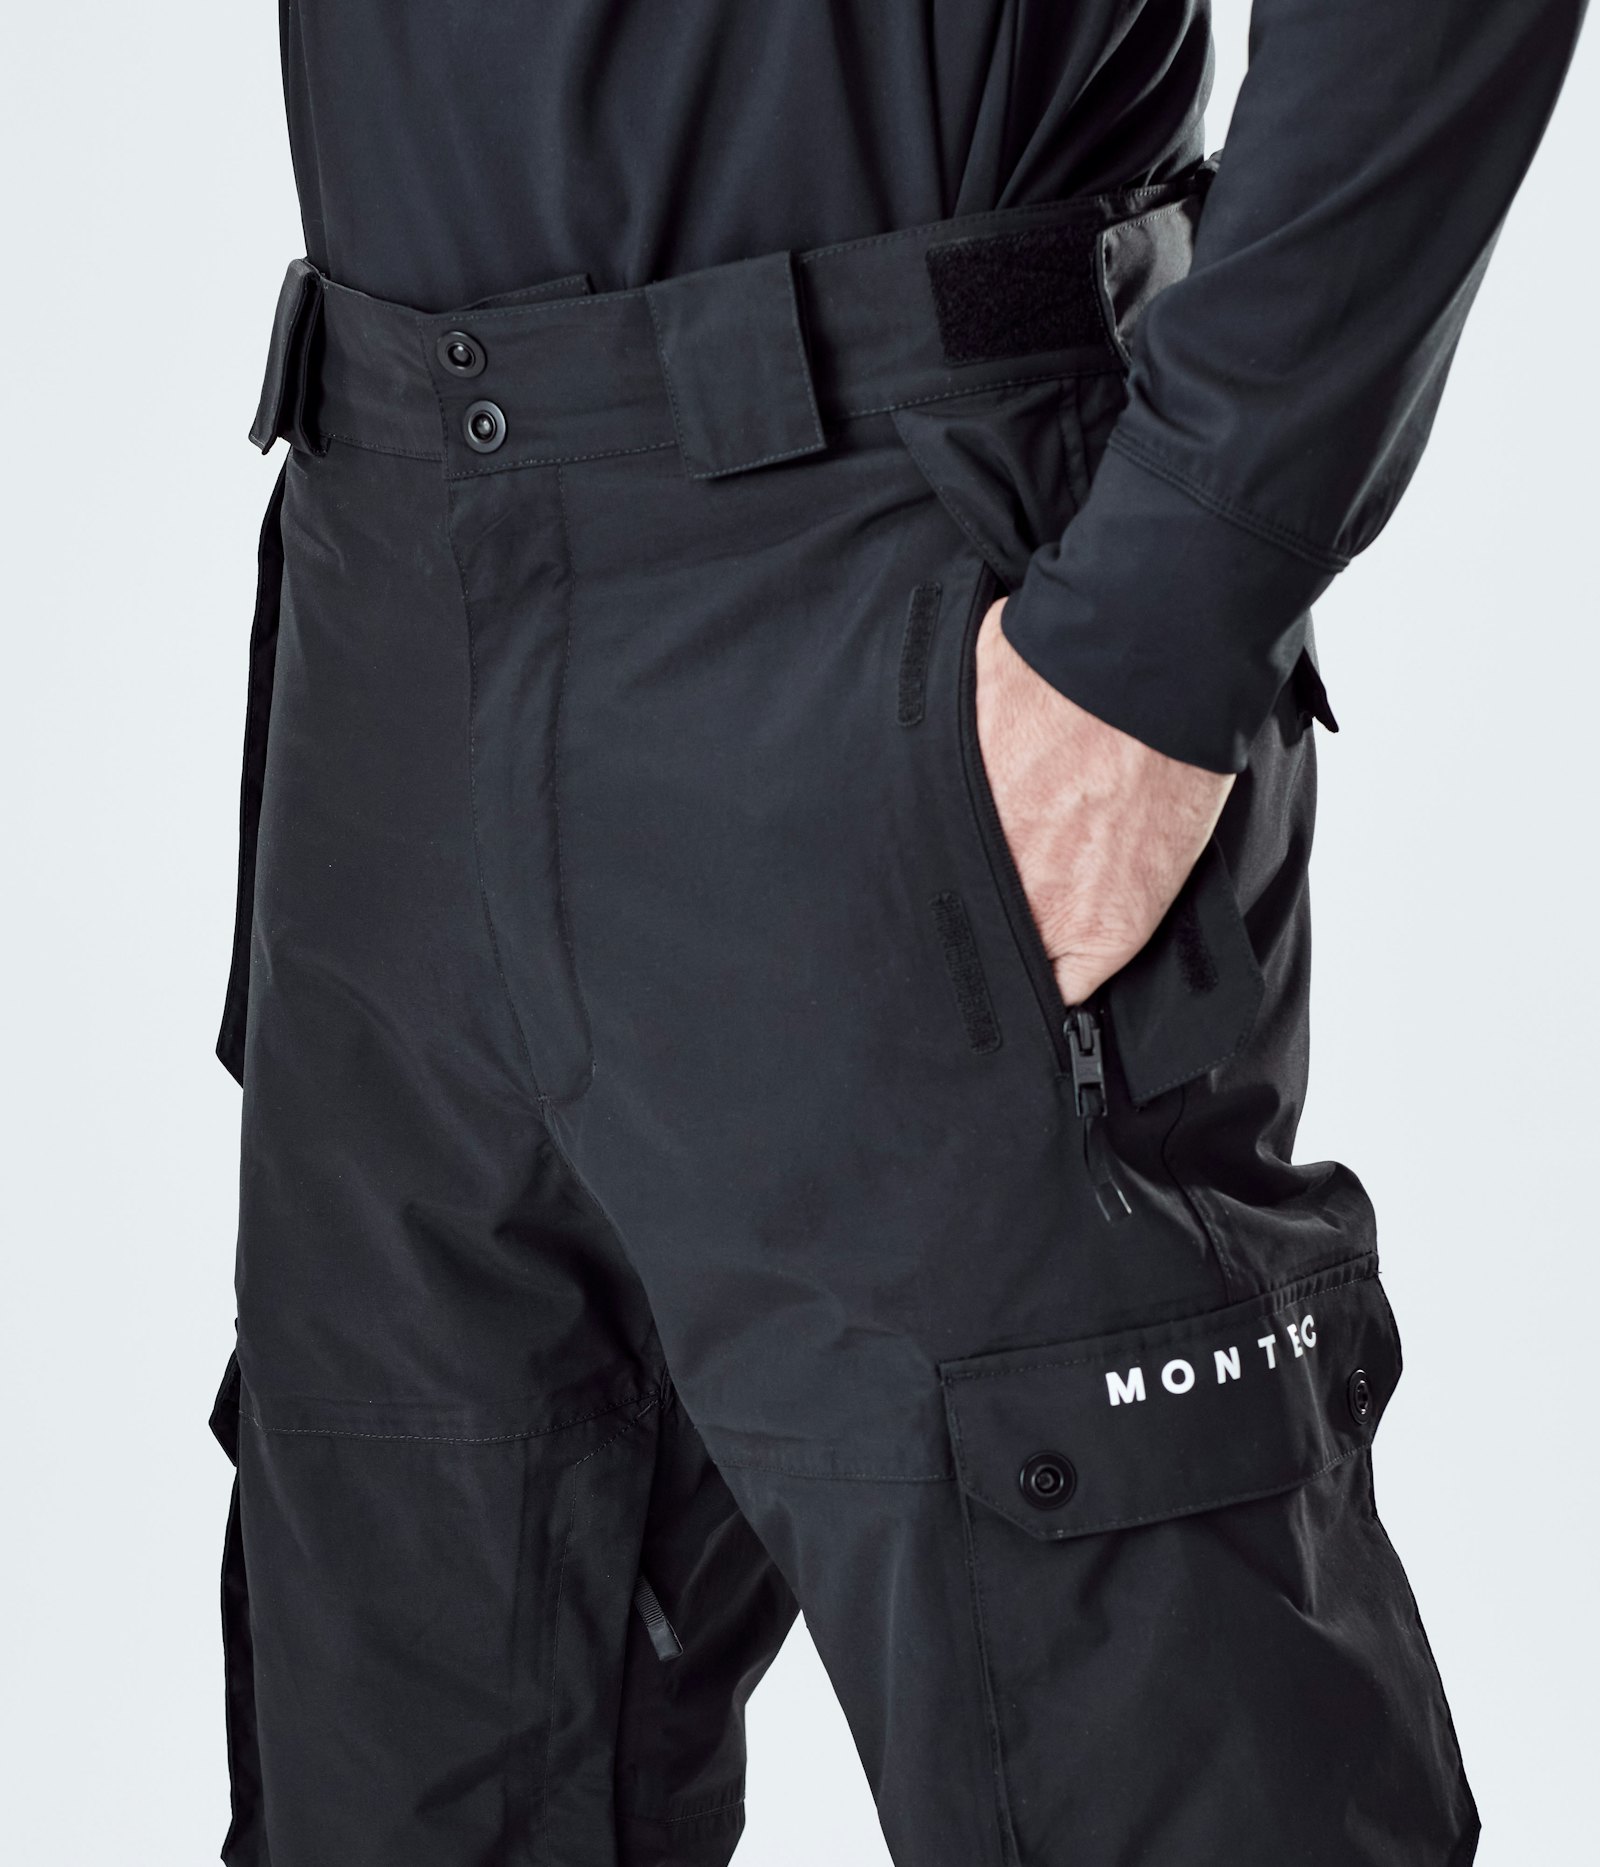 Doom 2020 Pantalon de Snowboard Homme Black